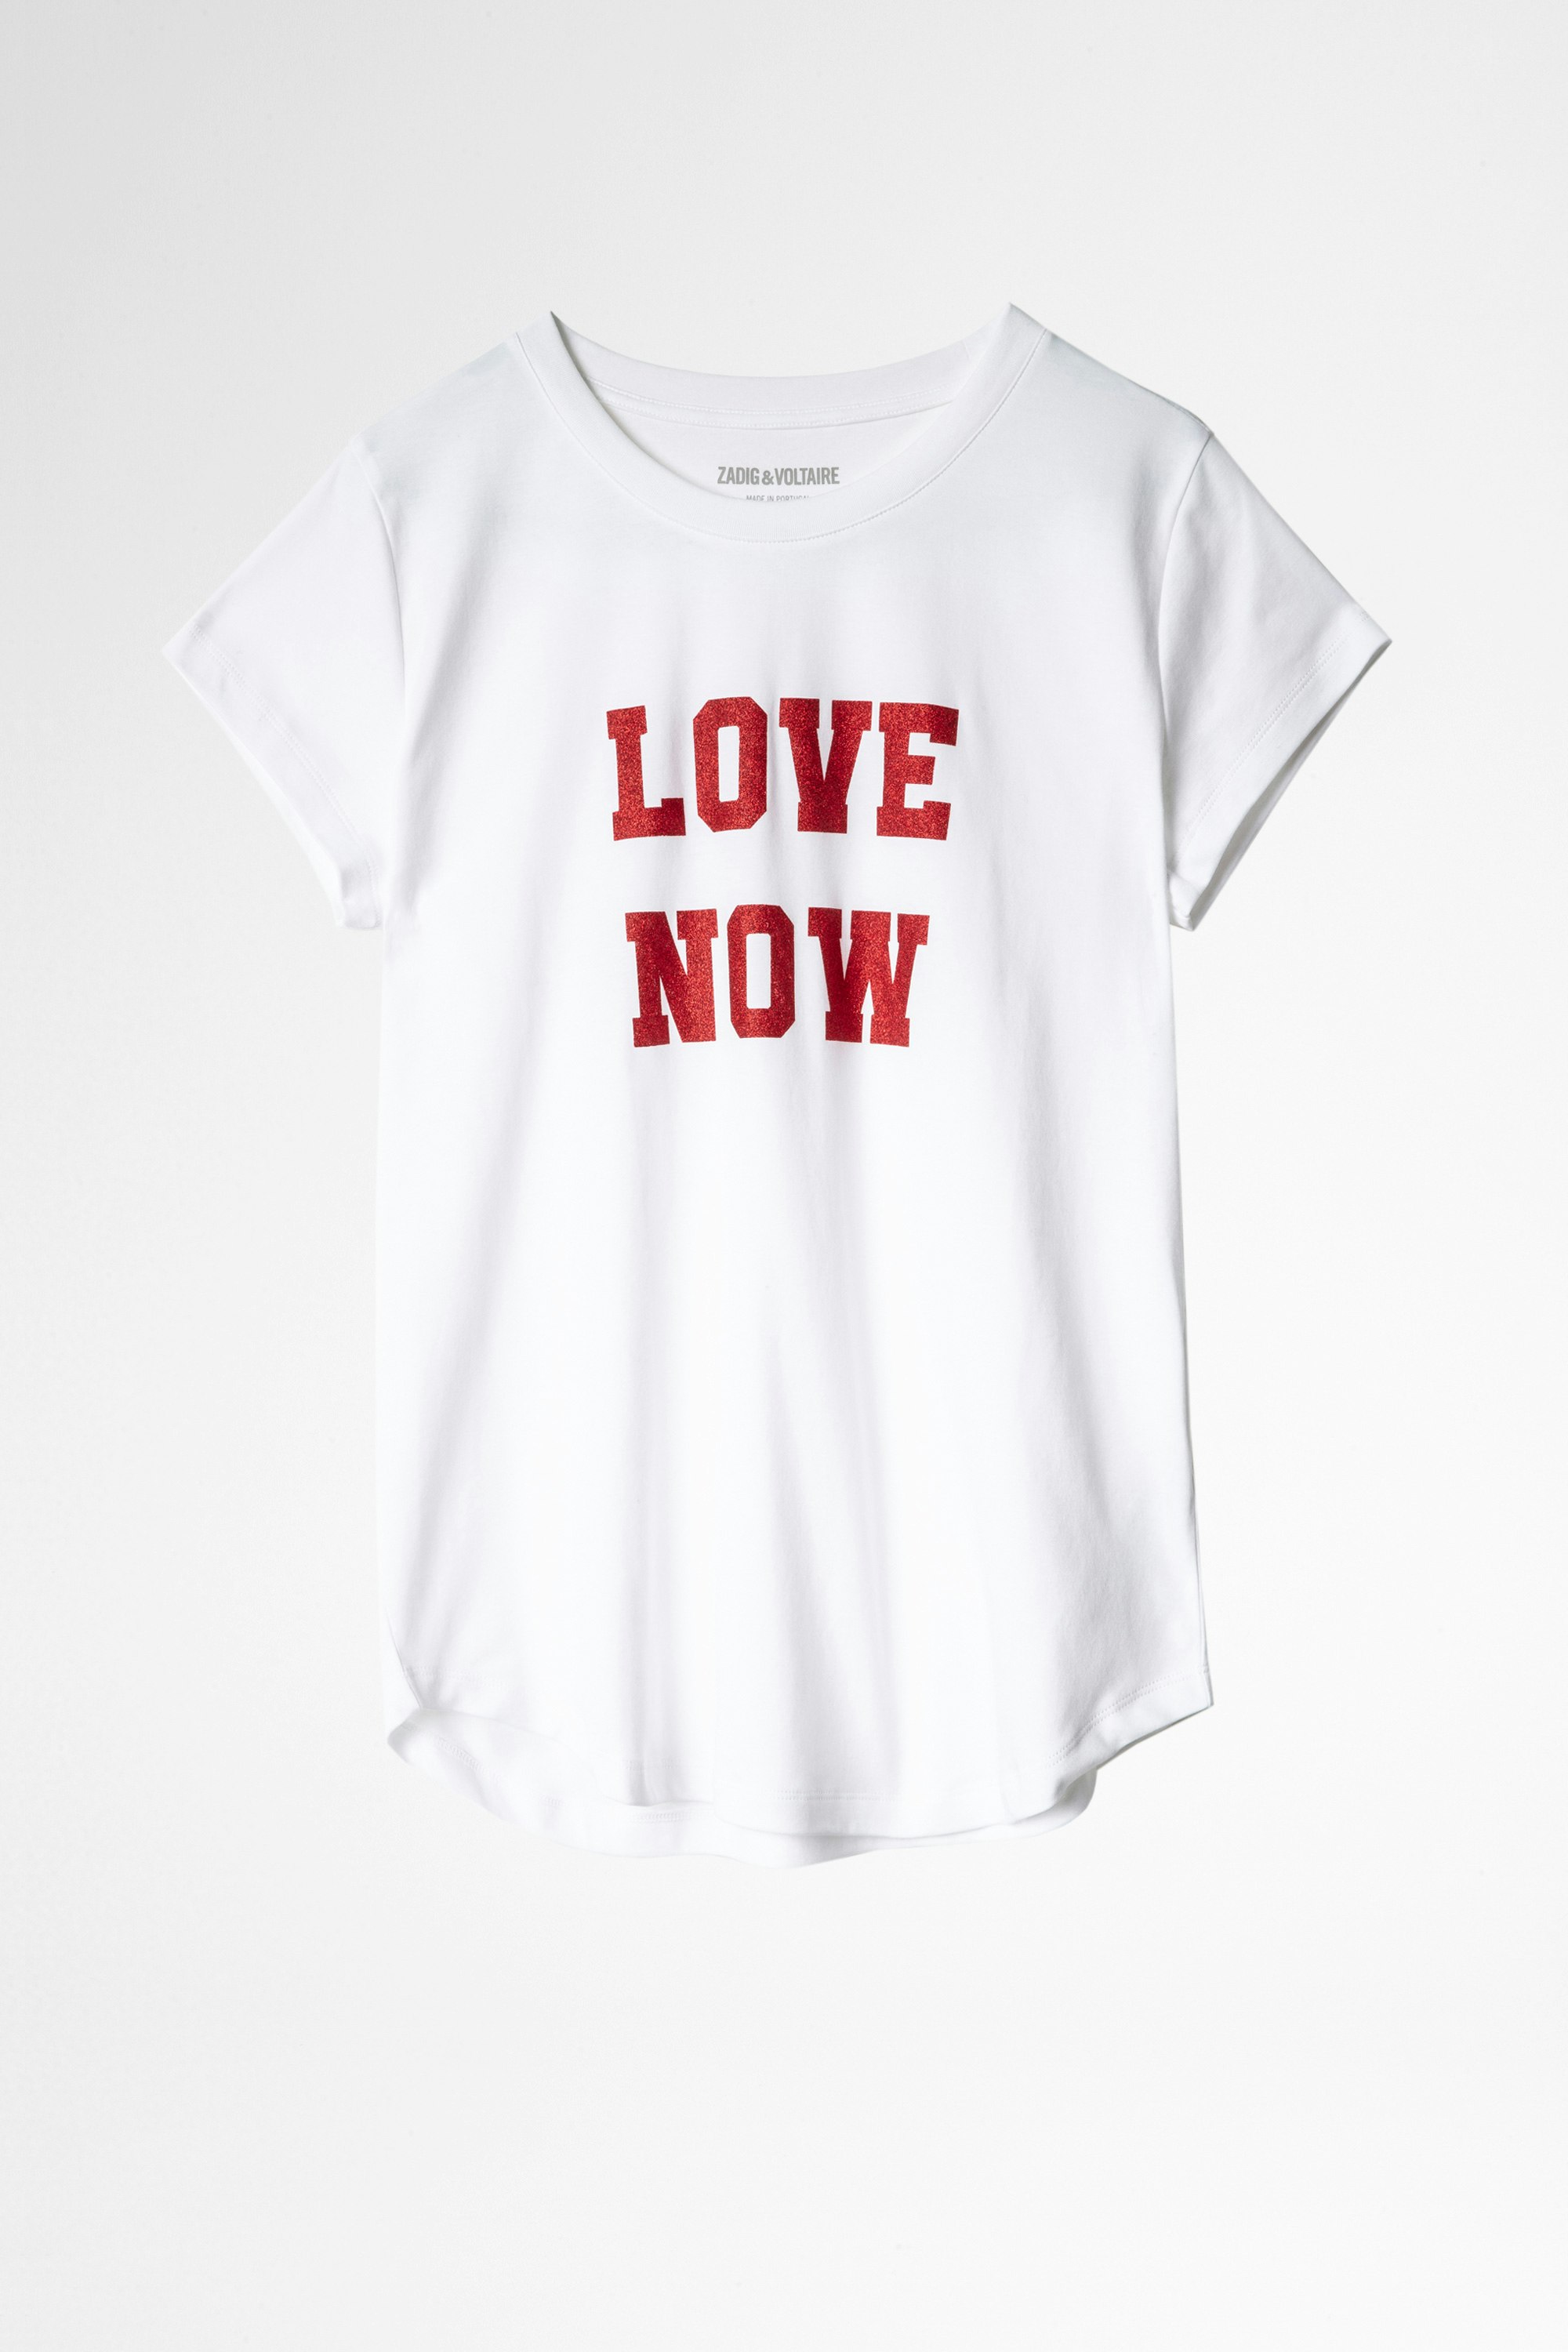 Woop Love Now T-shirt Women's white cotton Love Now T-shirt